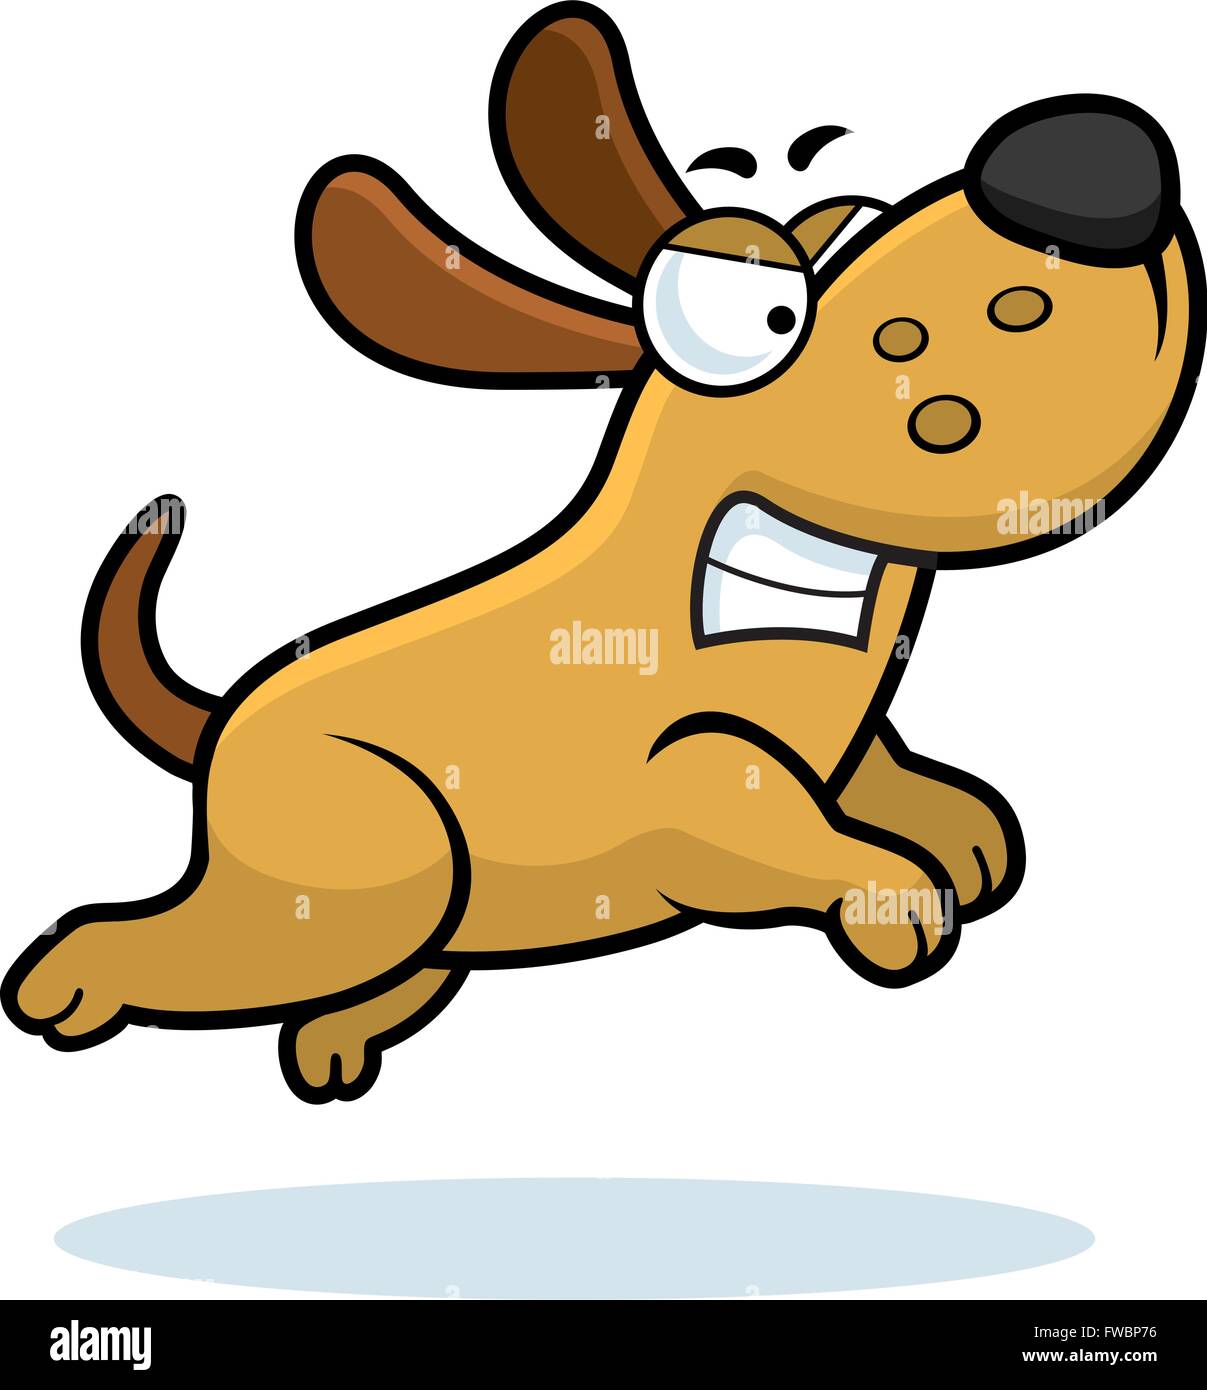 An angry cartoon dog running and growling Stock Vector Image & Art - Alamy